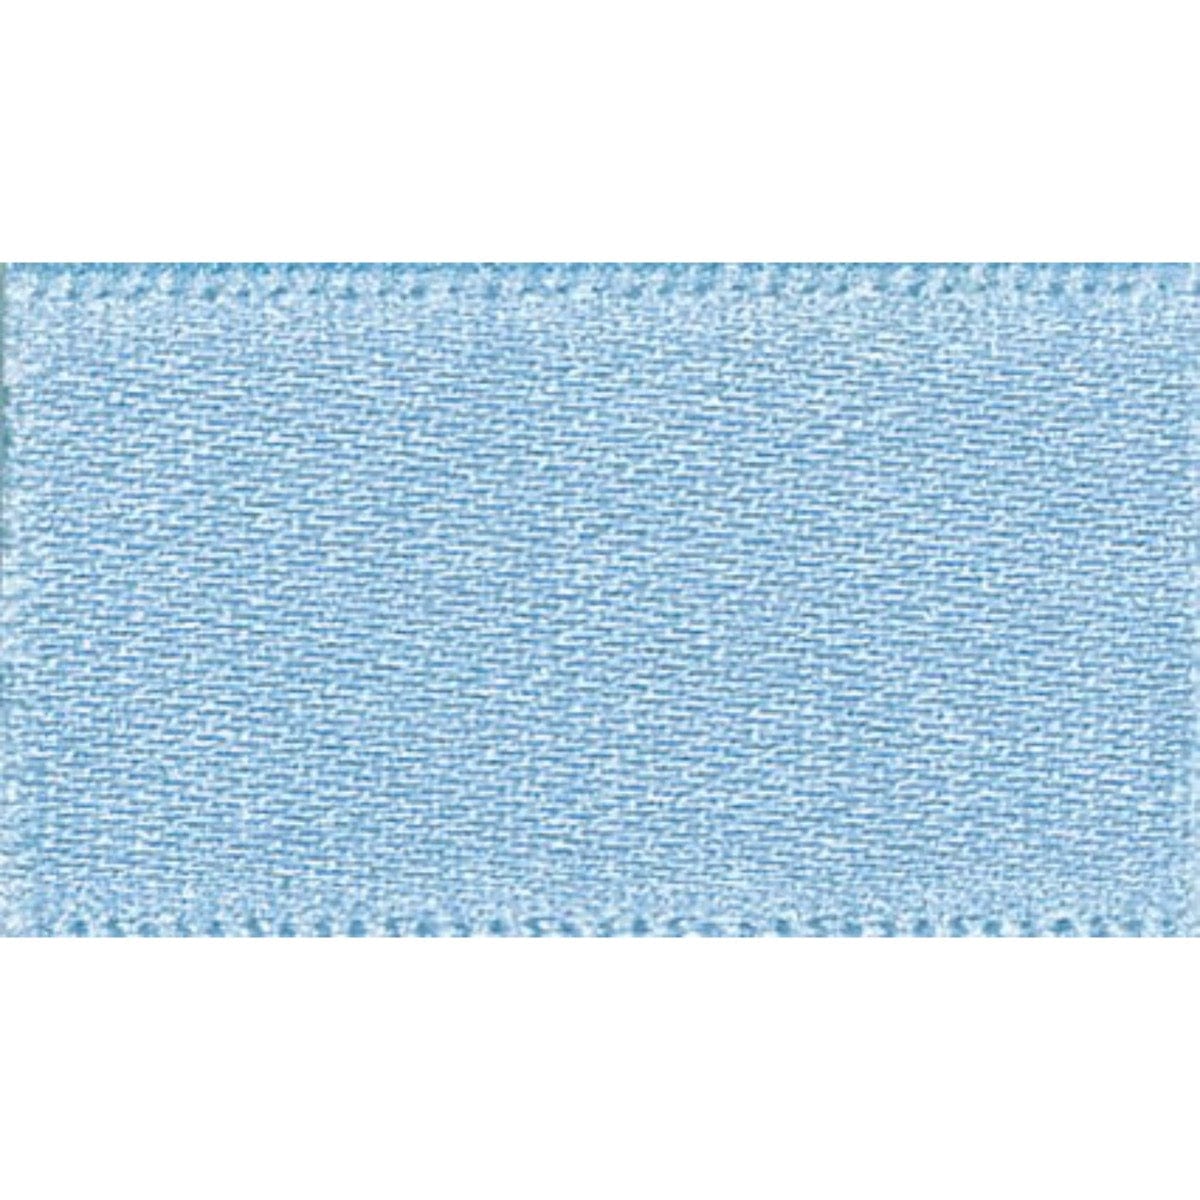 Double Faced Satin Ribbon Cornflower Blue: 25mm wide. Price per metre.